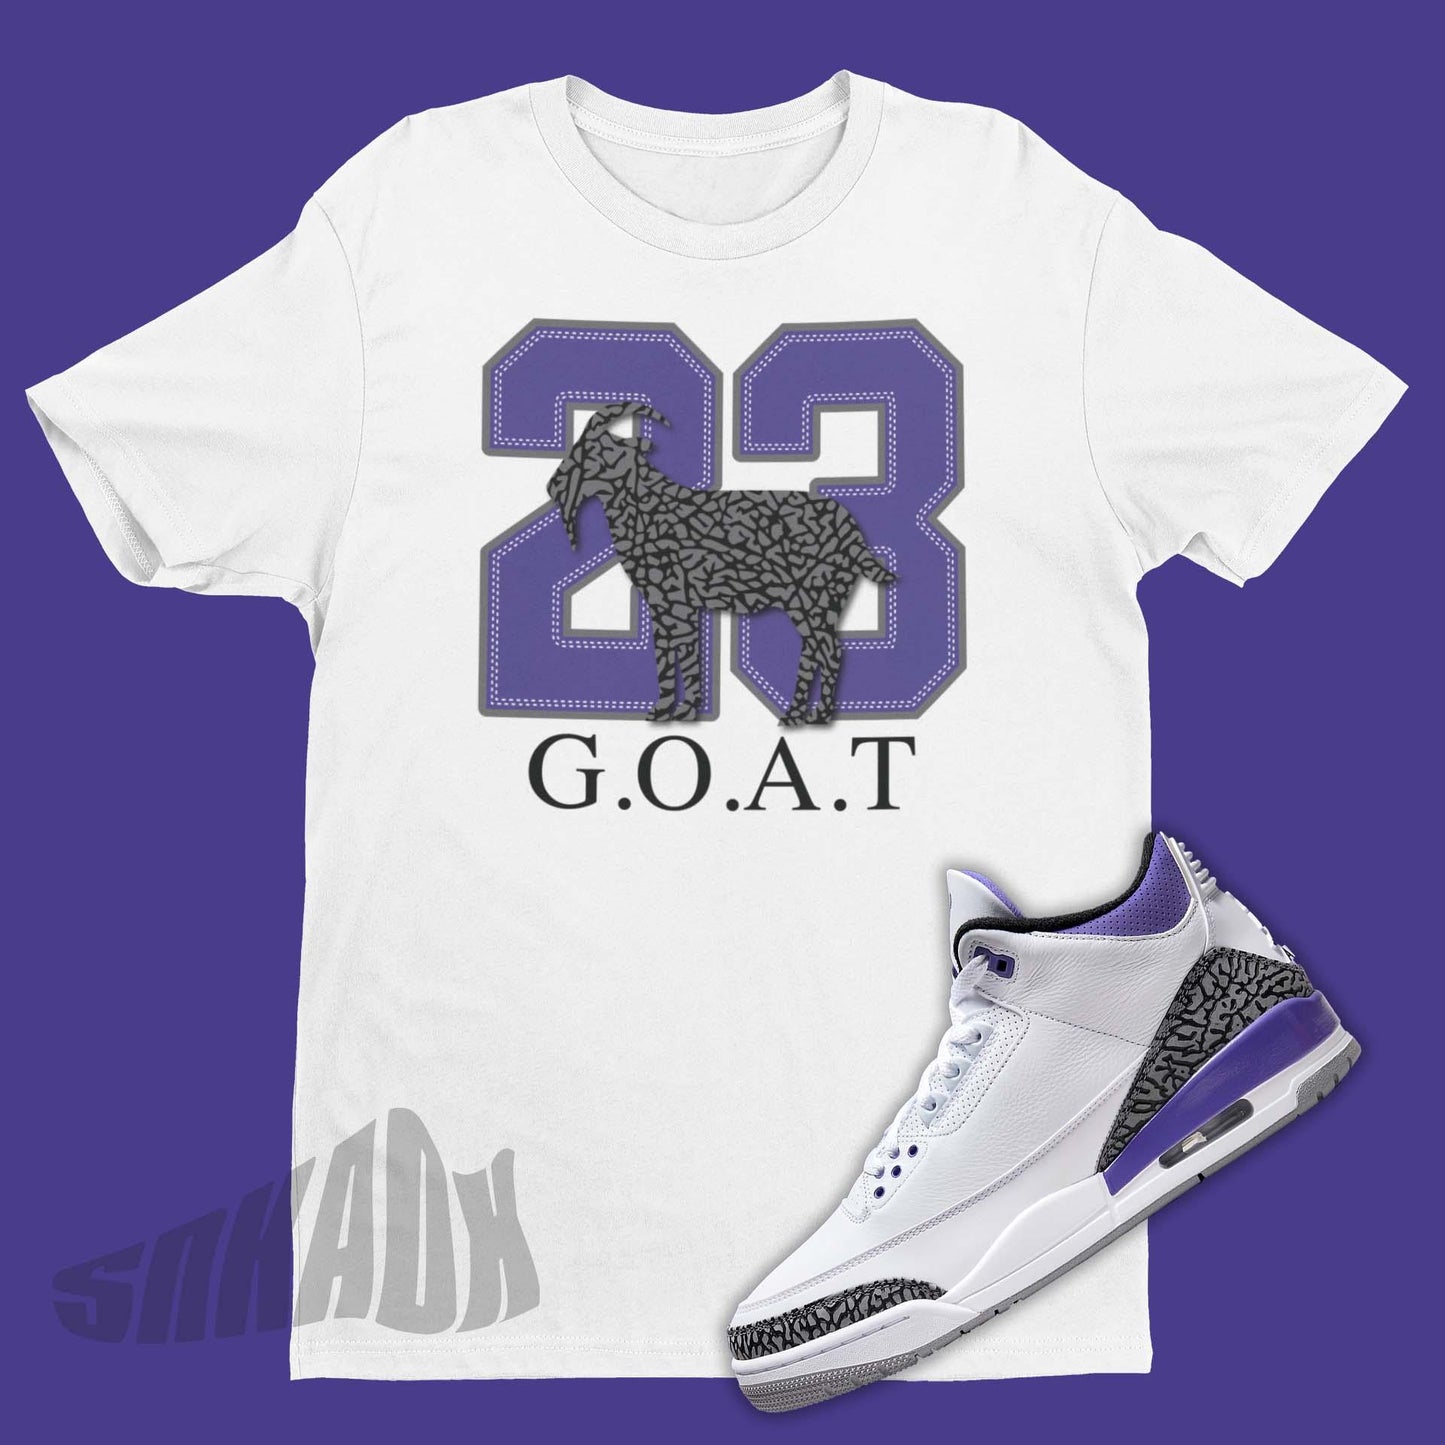 23 GOAT Shirt To Match Air Jordan 3 Dark Iris